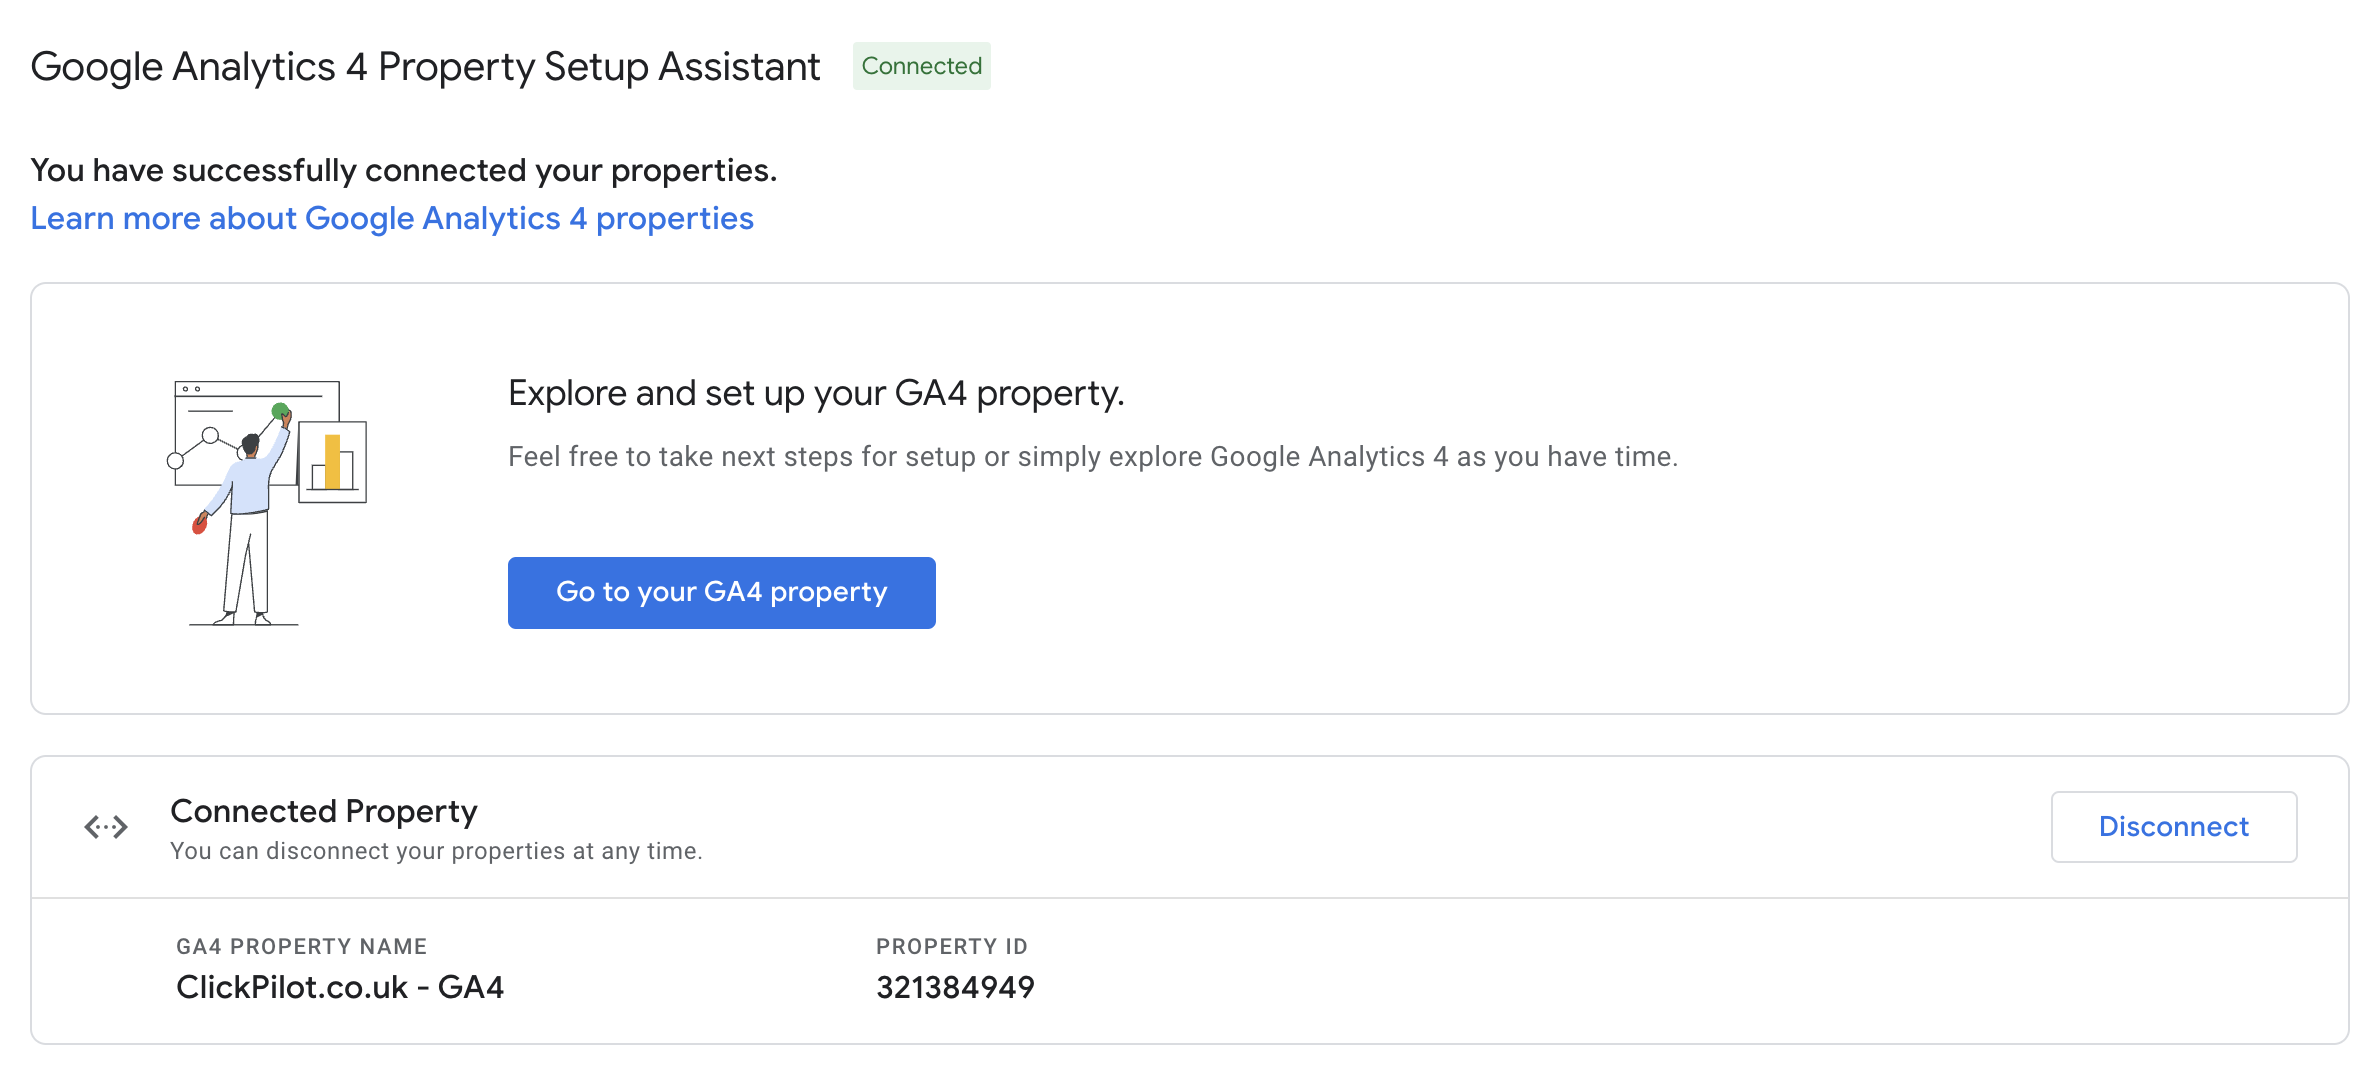 Google Analytics 4 Property Setup Complete Notification